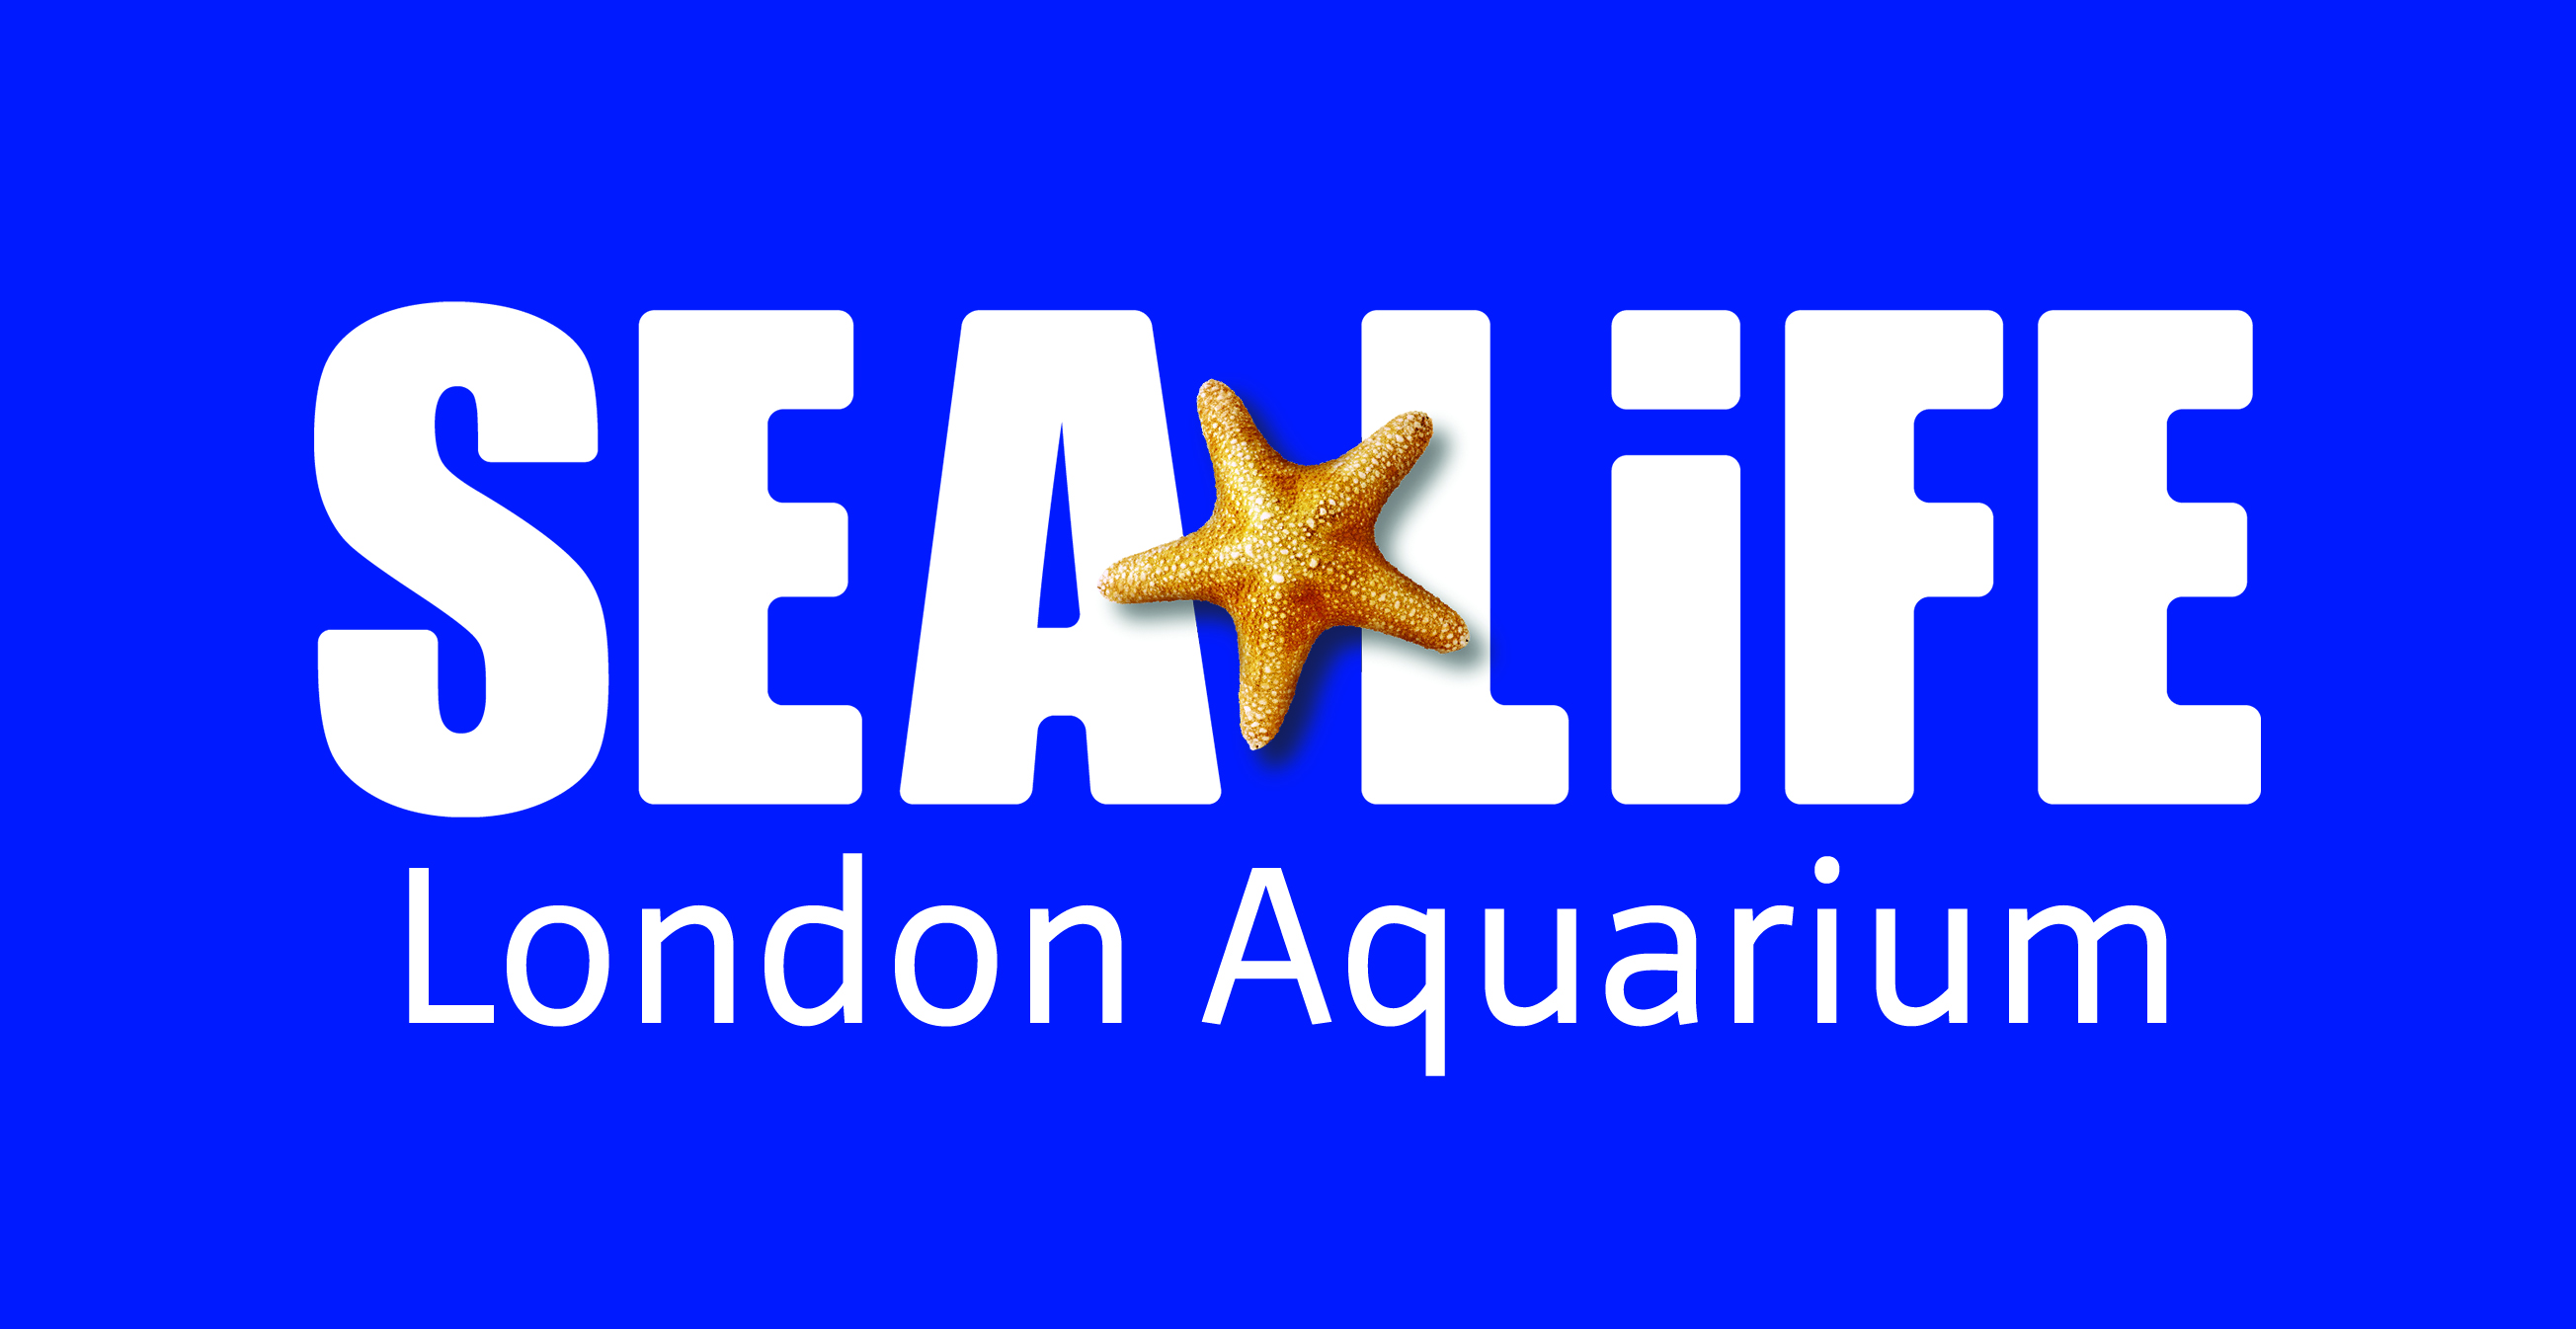 SEA LIFE London logo in blue